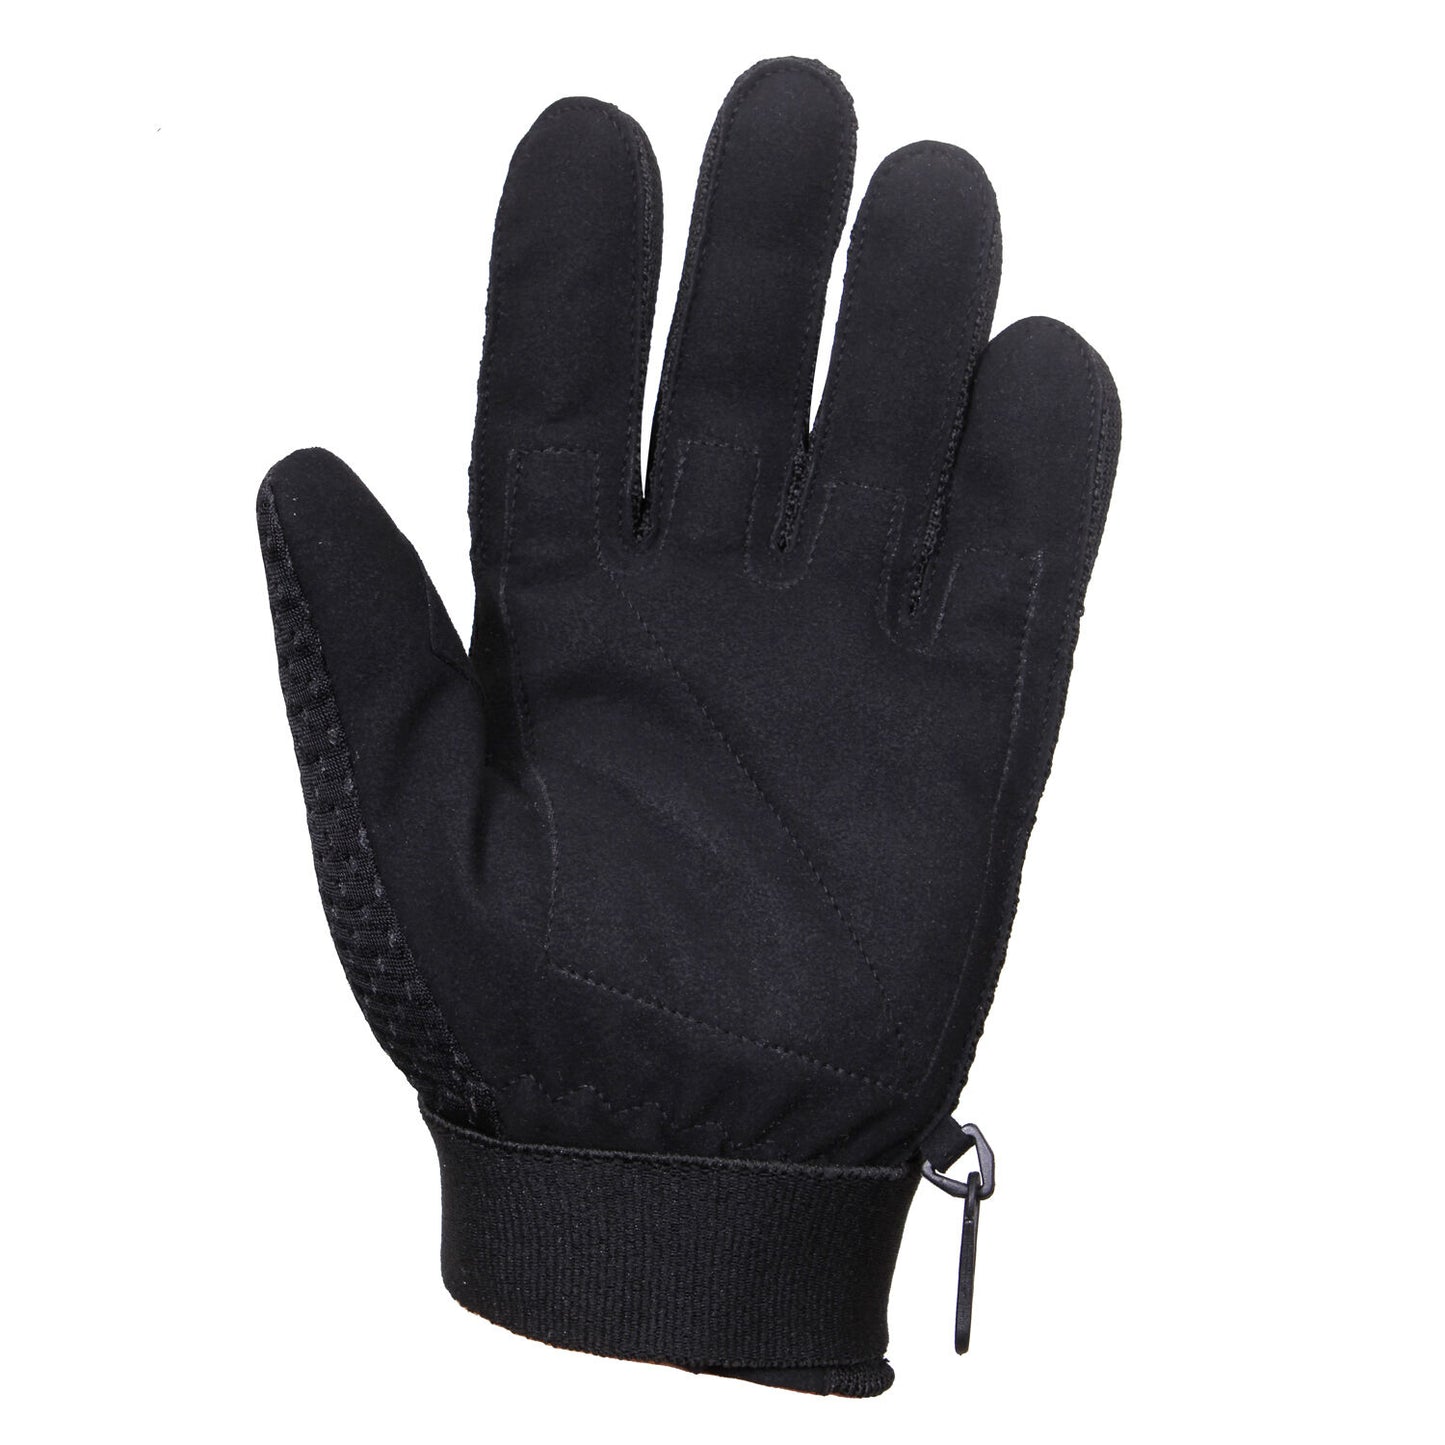 Rothco Hard Back Gloves